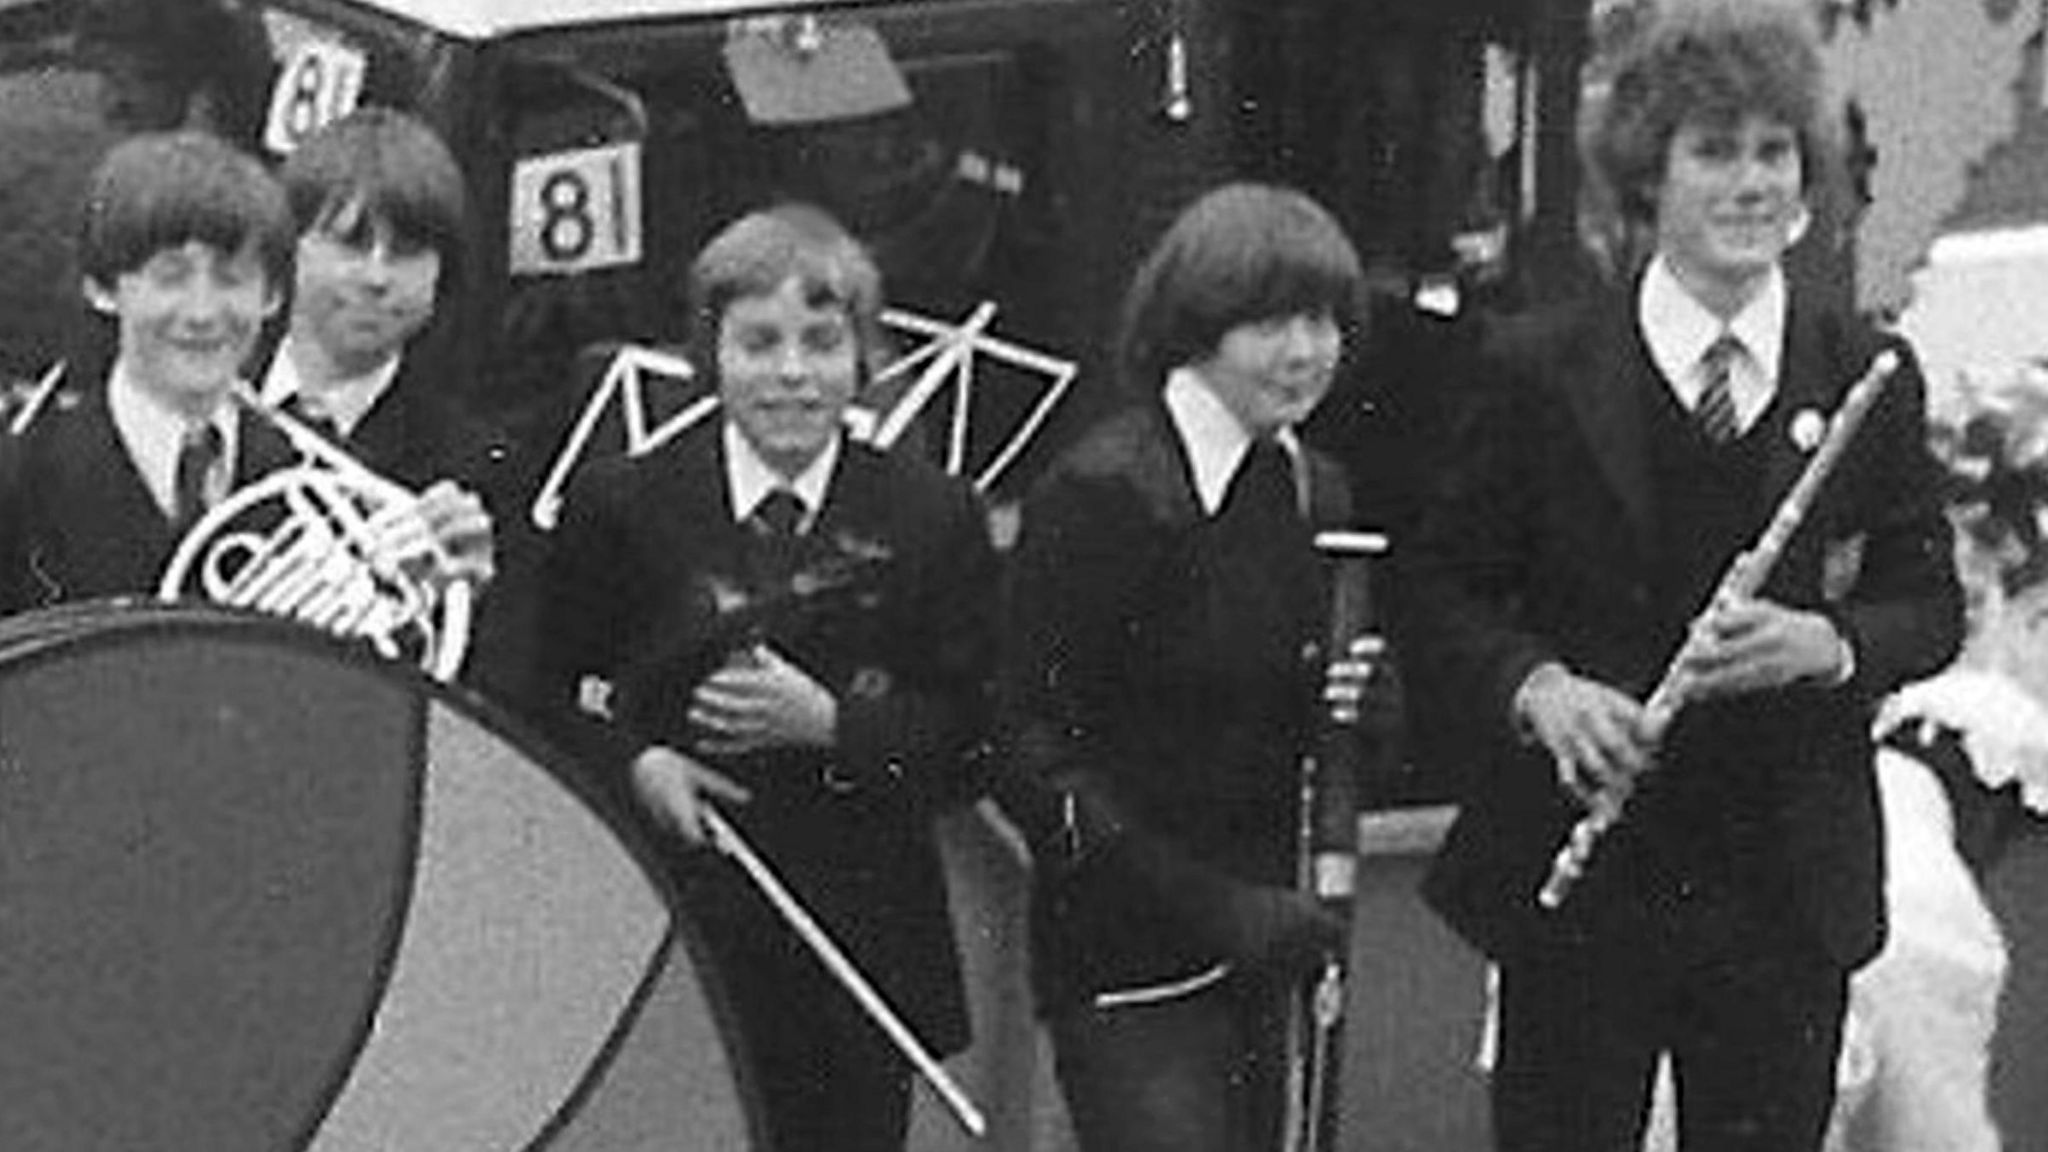 Keir Starmer, in school uniform and holding a flute, stands alongside fellow school musicians